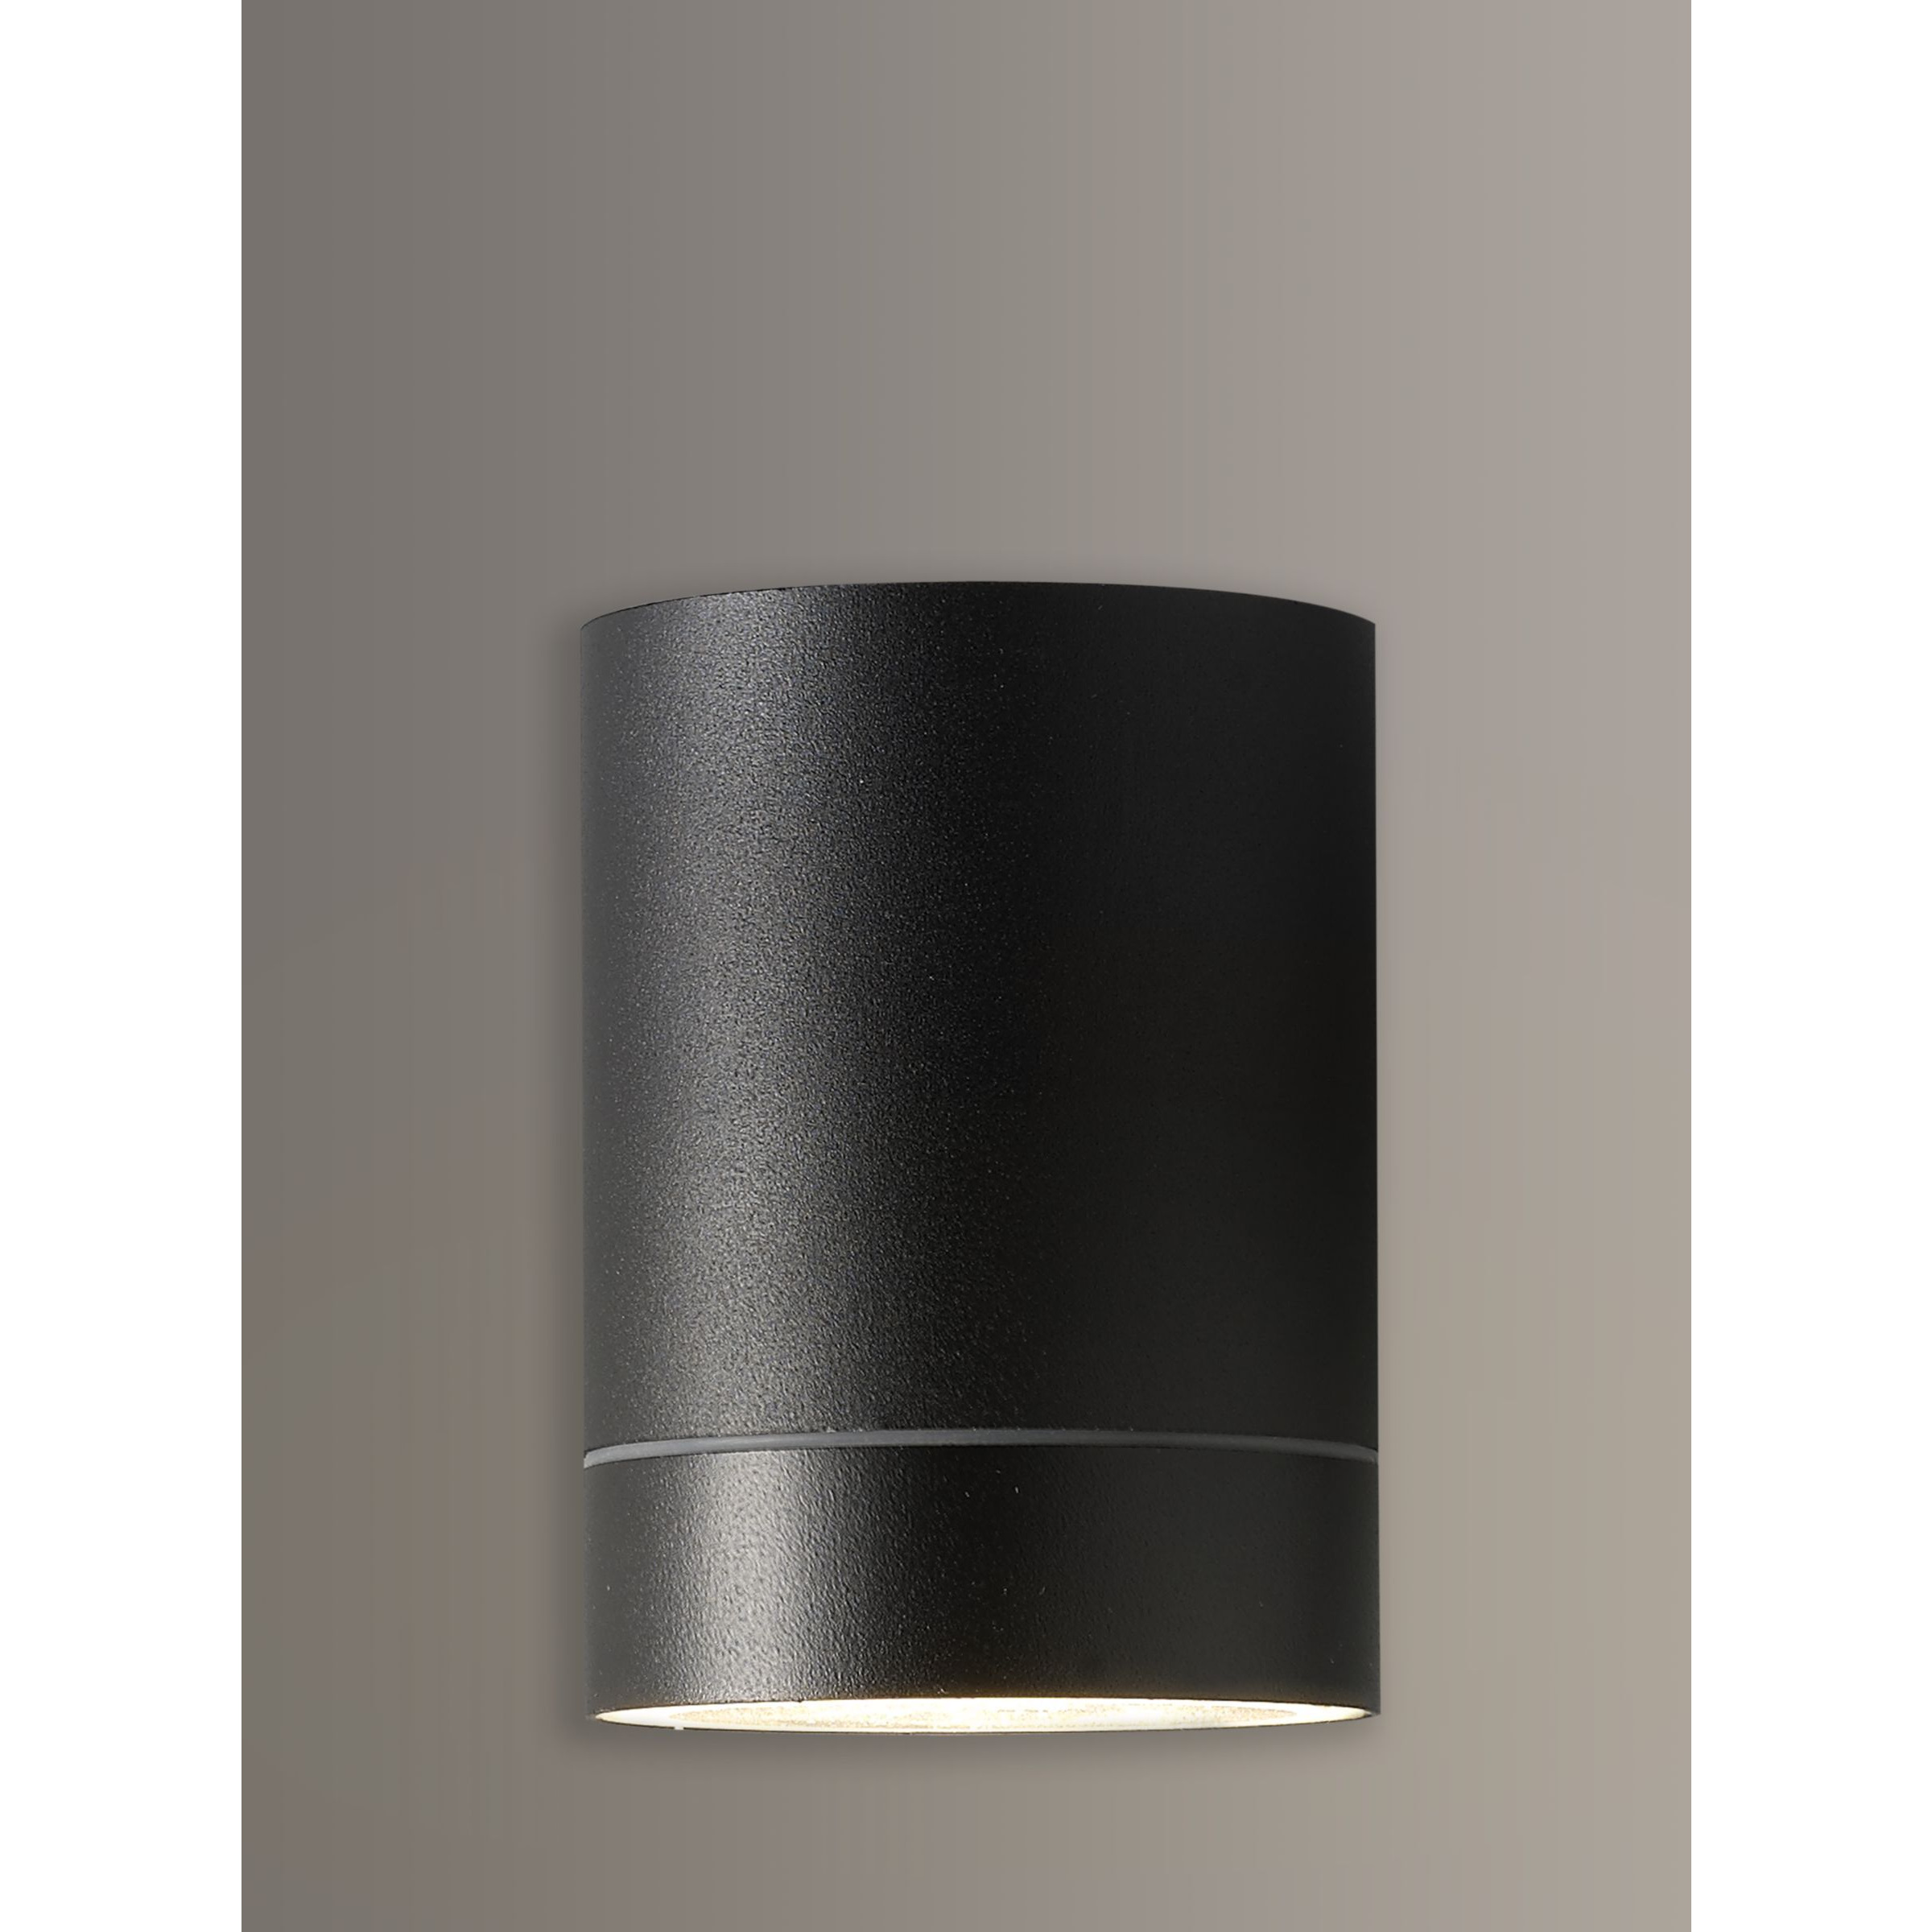 Nordlux Tin Maxi Outdoor Wall Light, Black - image 1